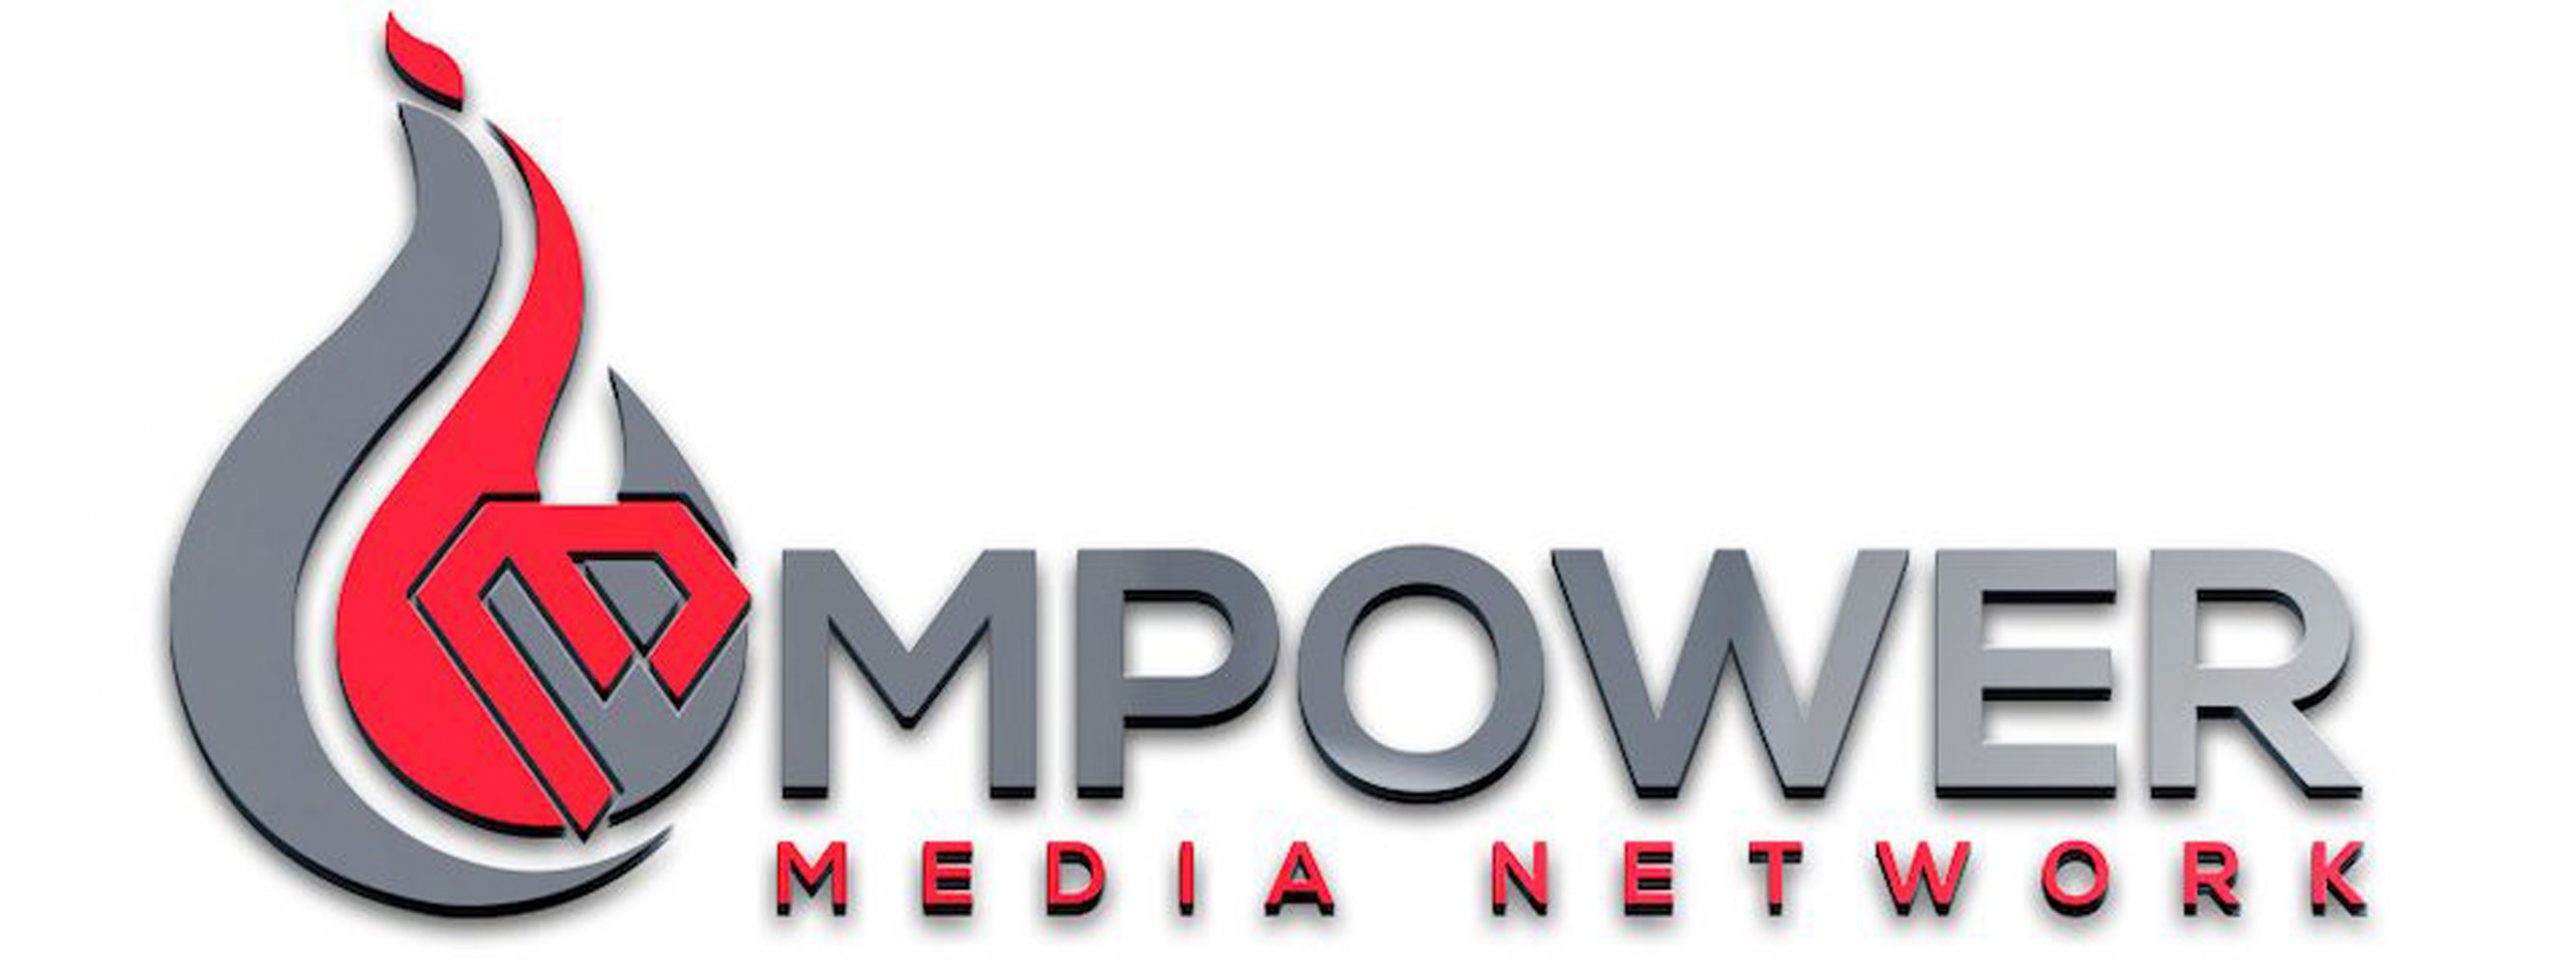 Empower Media Network Logo